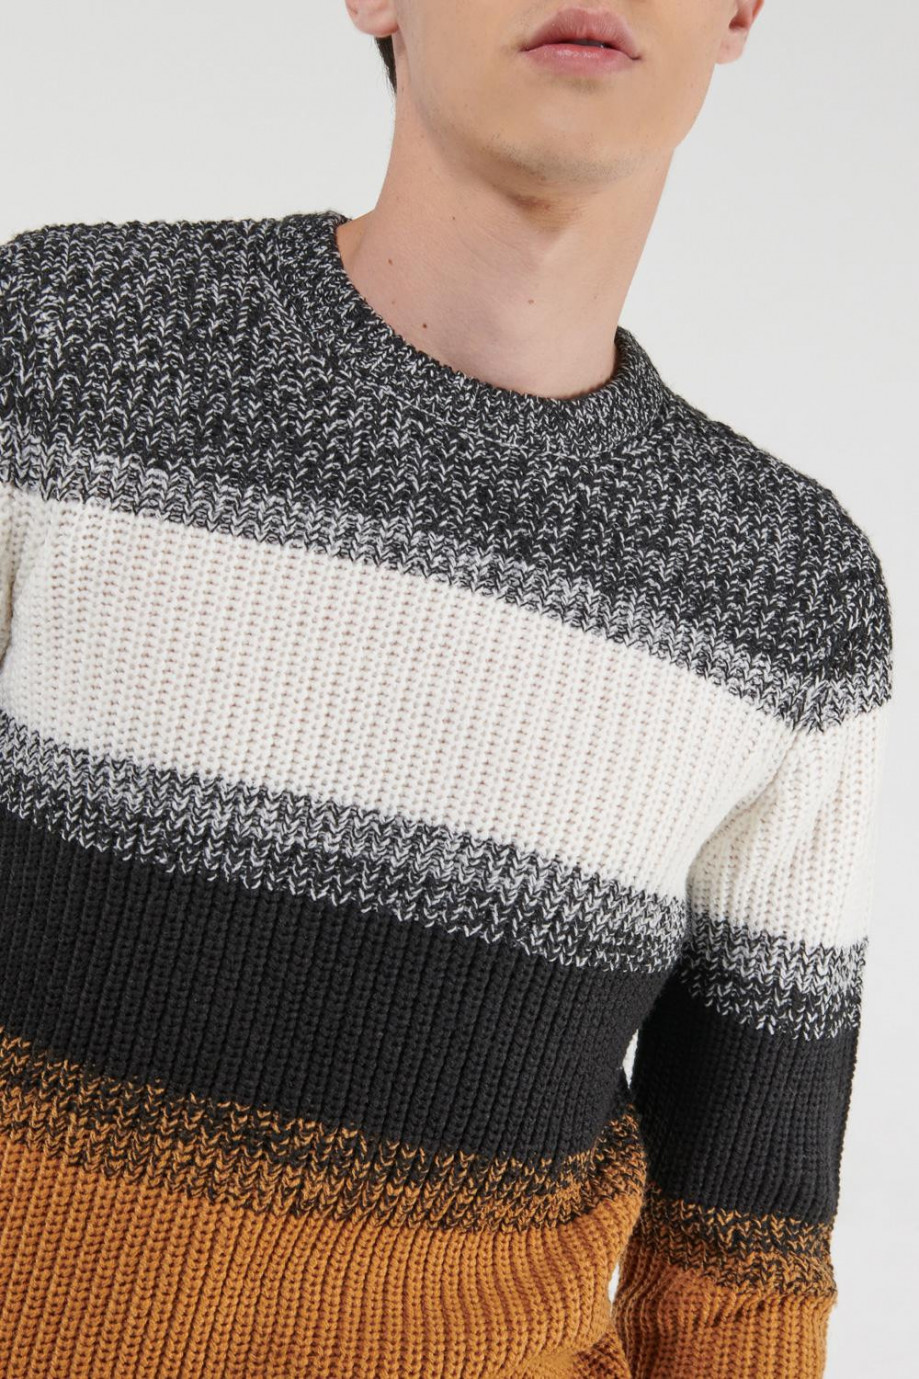 Suéter cuello redondo con rayas